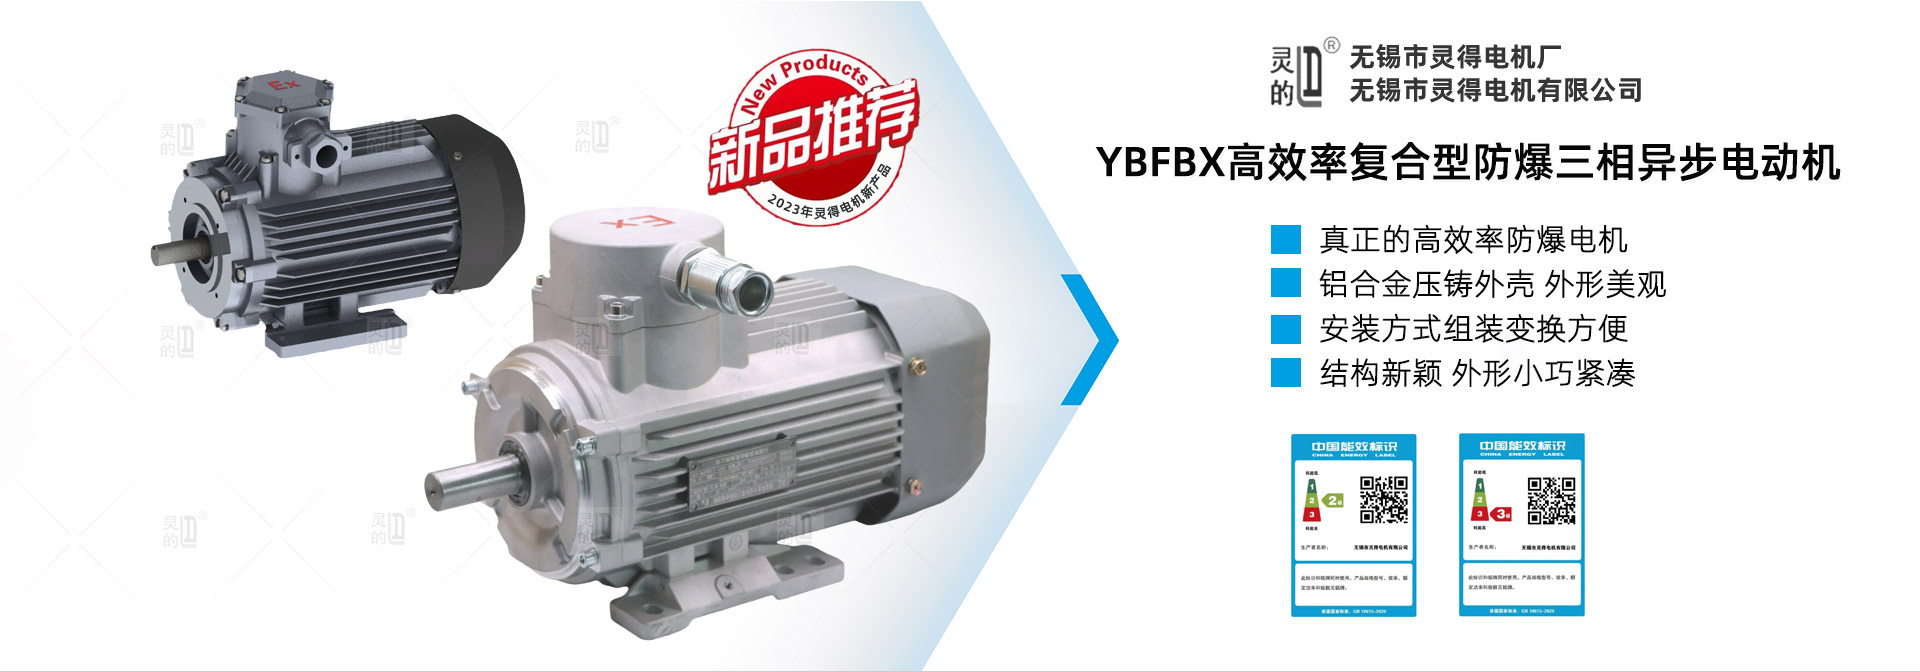 YBFBX高效率復合型防爆三相異步電動機